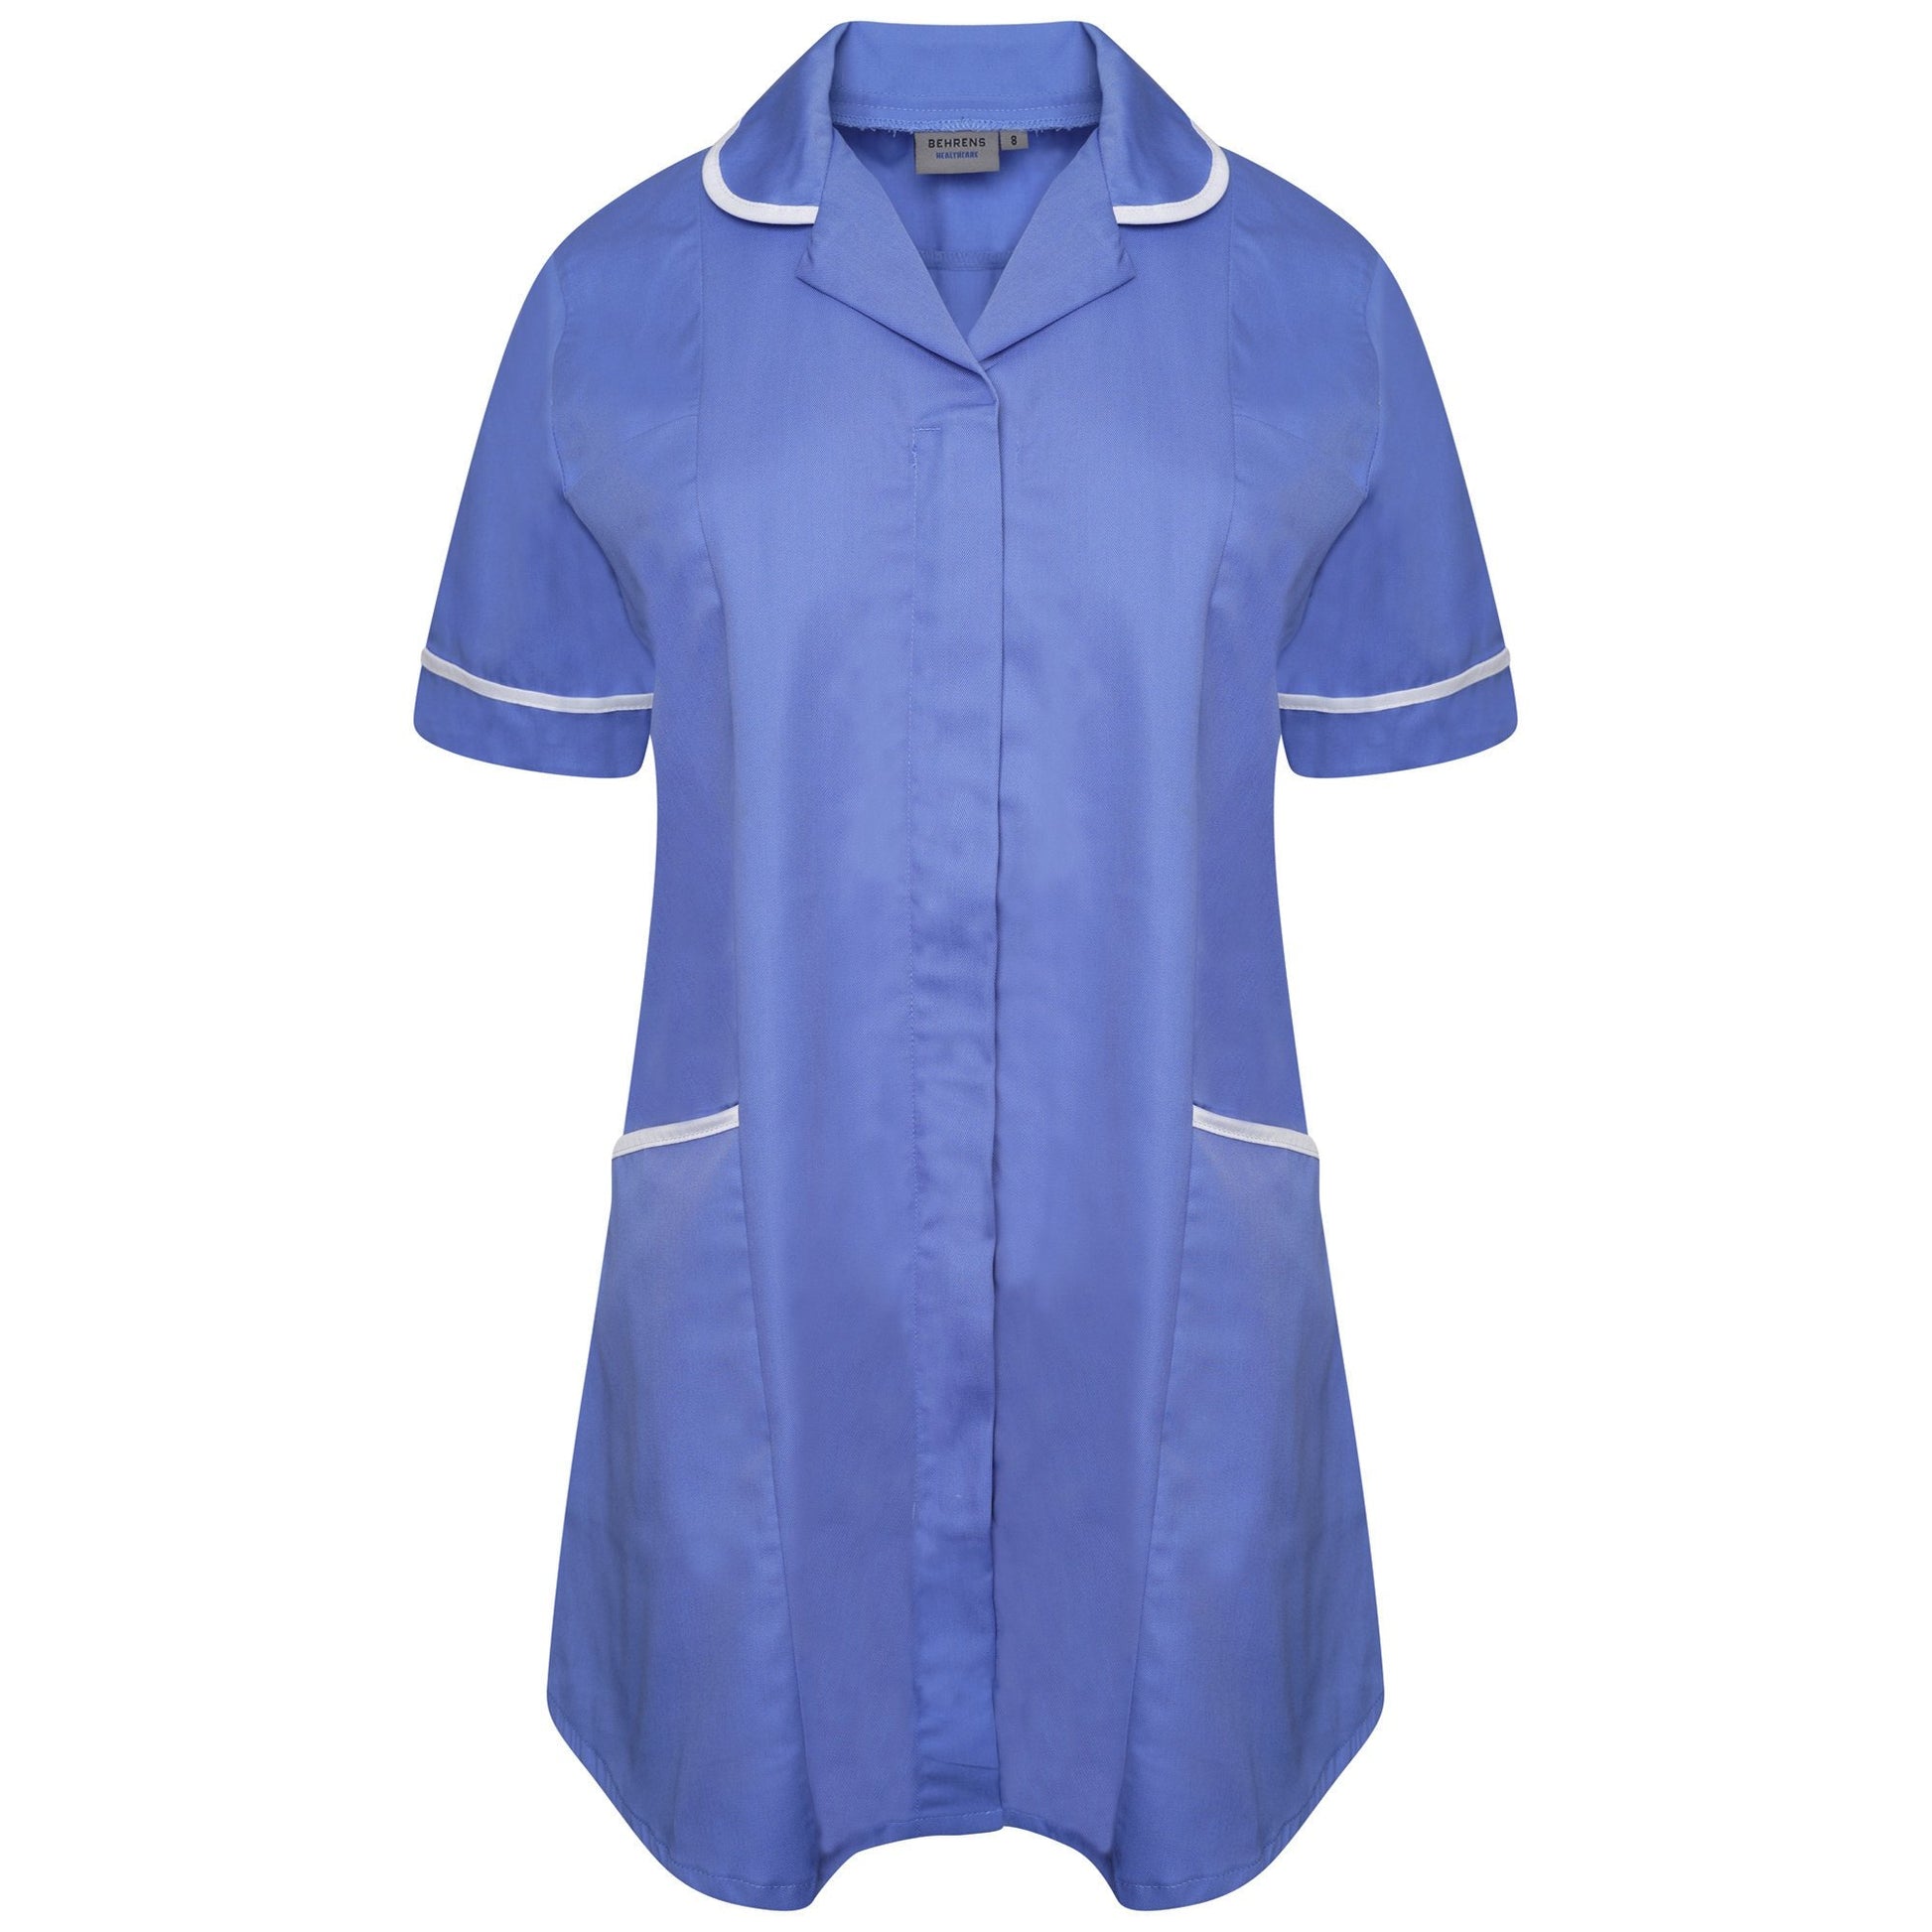 Behrens Maternity Nures Tunic Hospital Blue/White Trim UK 8